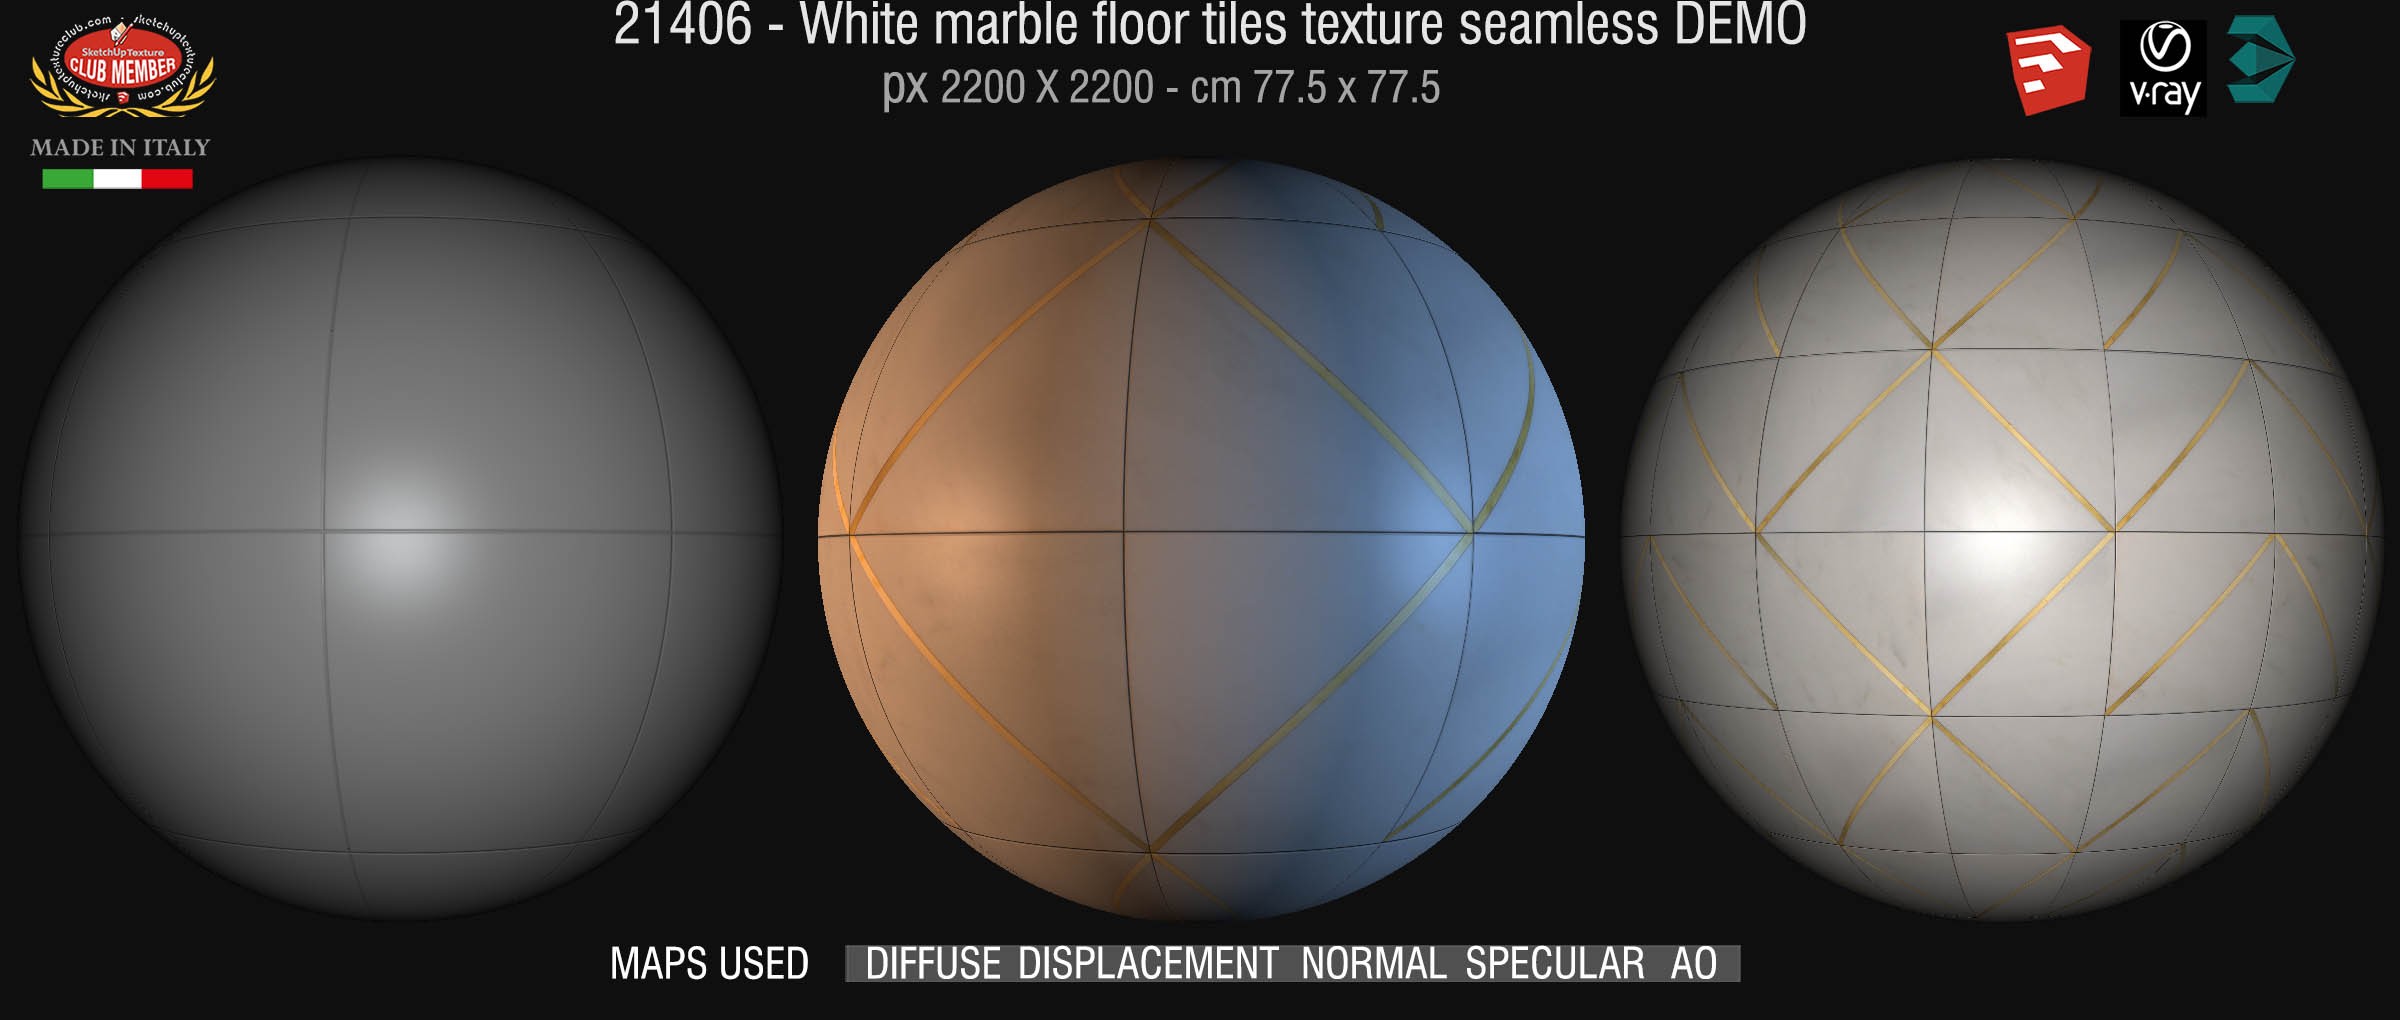 21406  white marble floor tiles texture seamless + maps DEMO